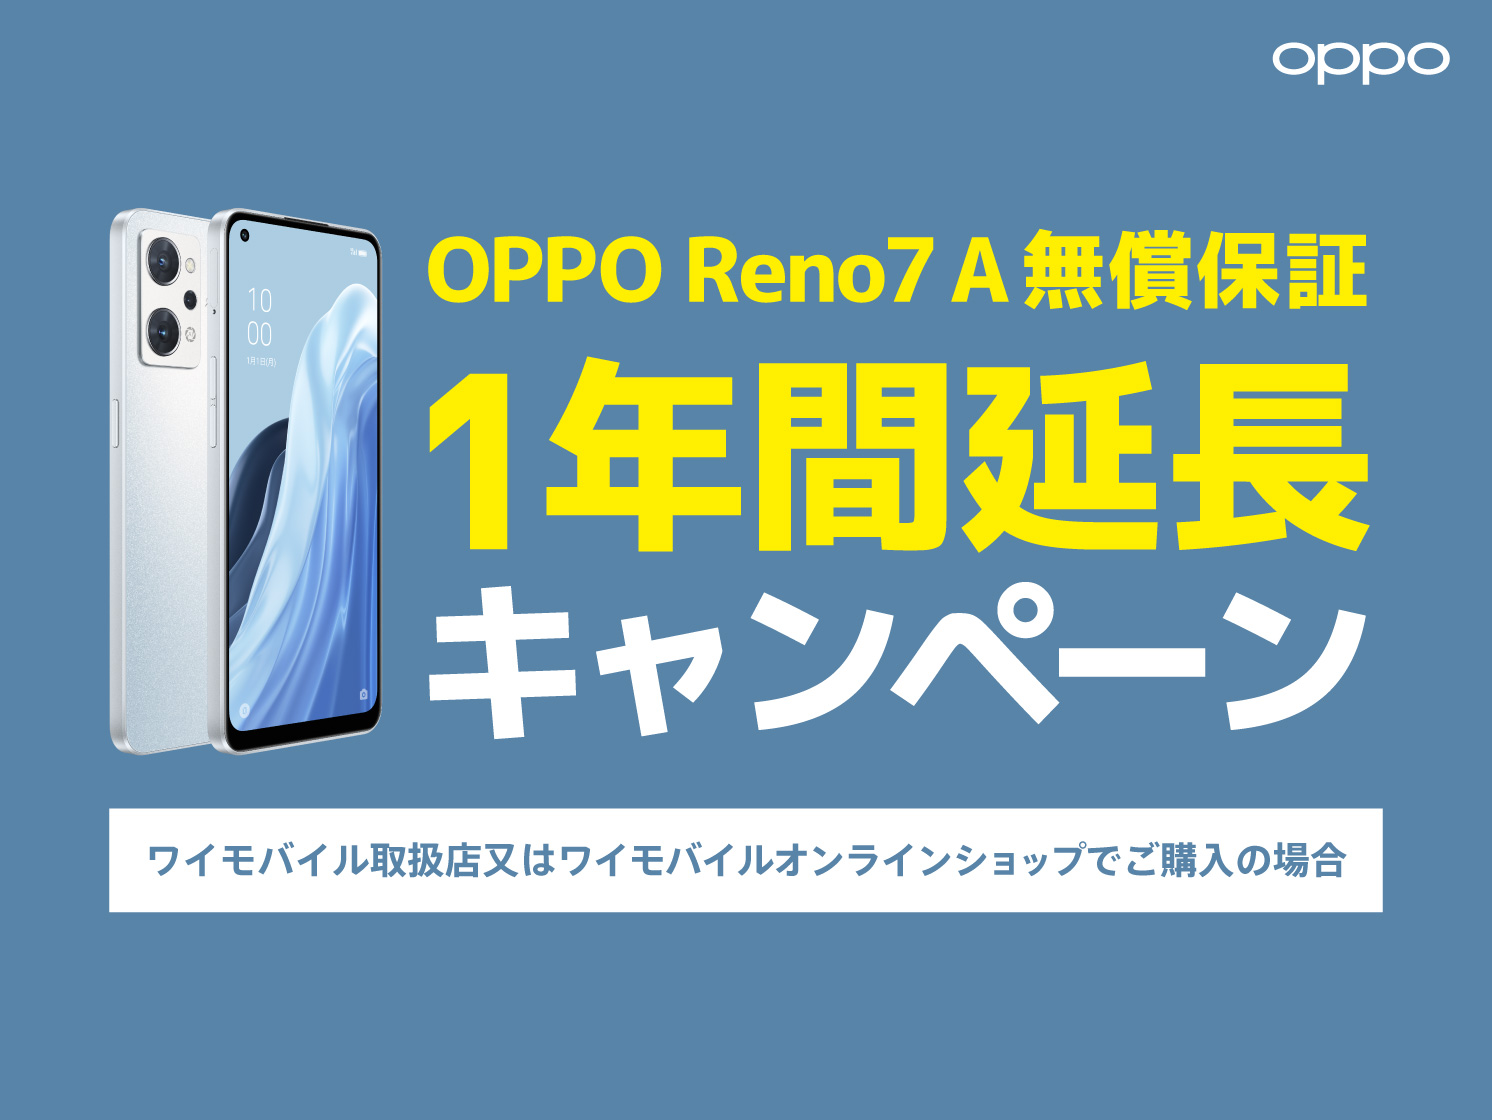 OPPO Reno7 A Android スマートフォン ワイモバイル